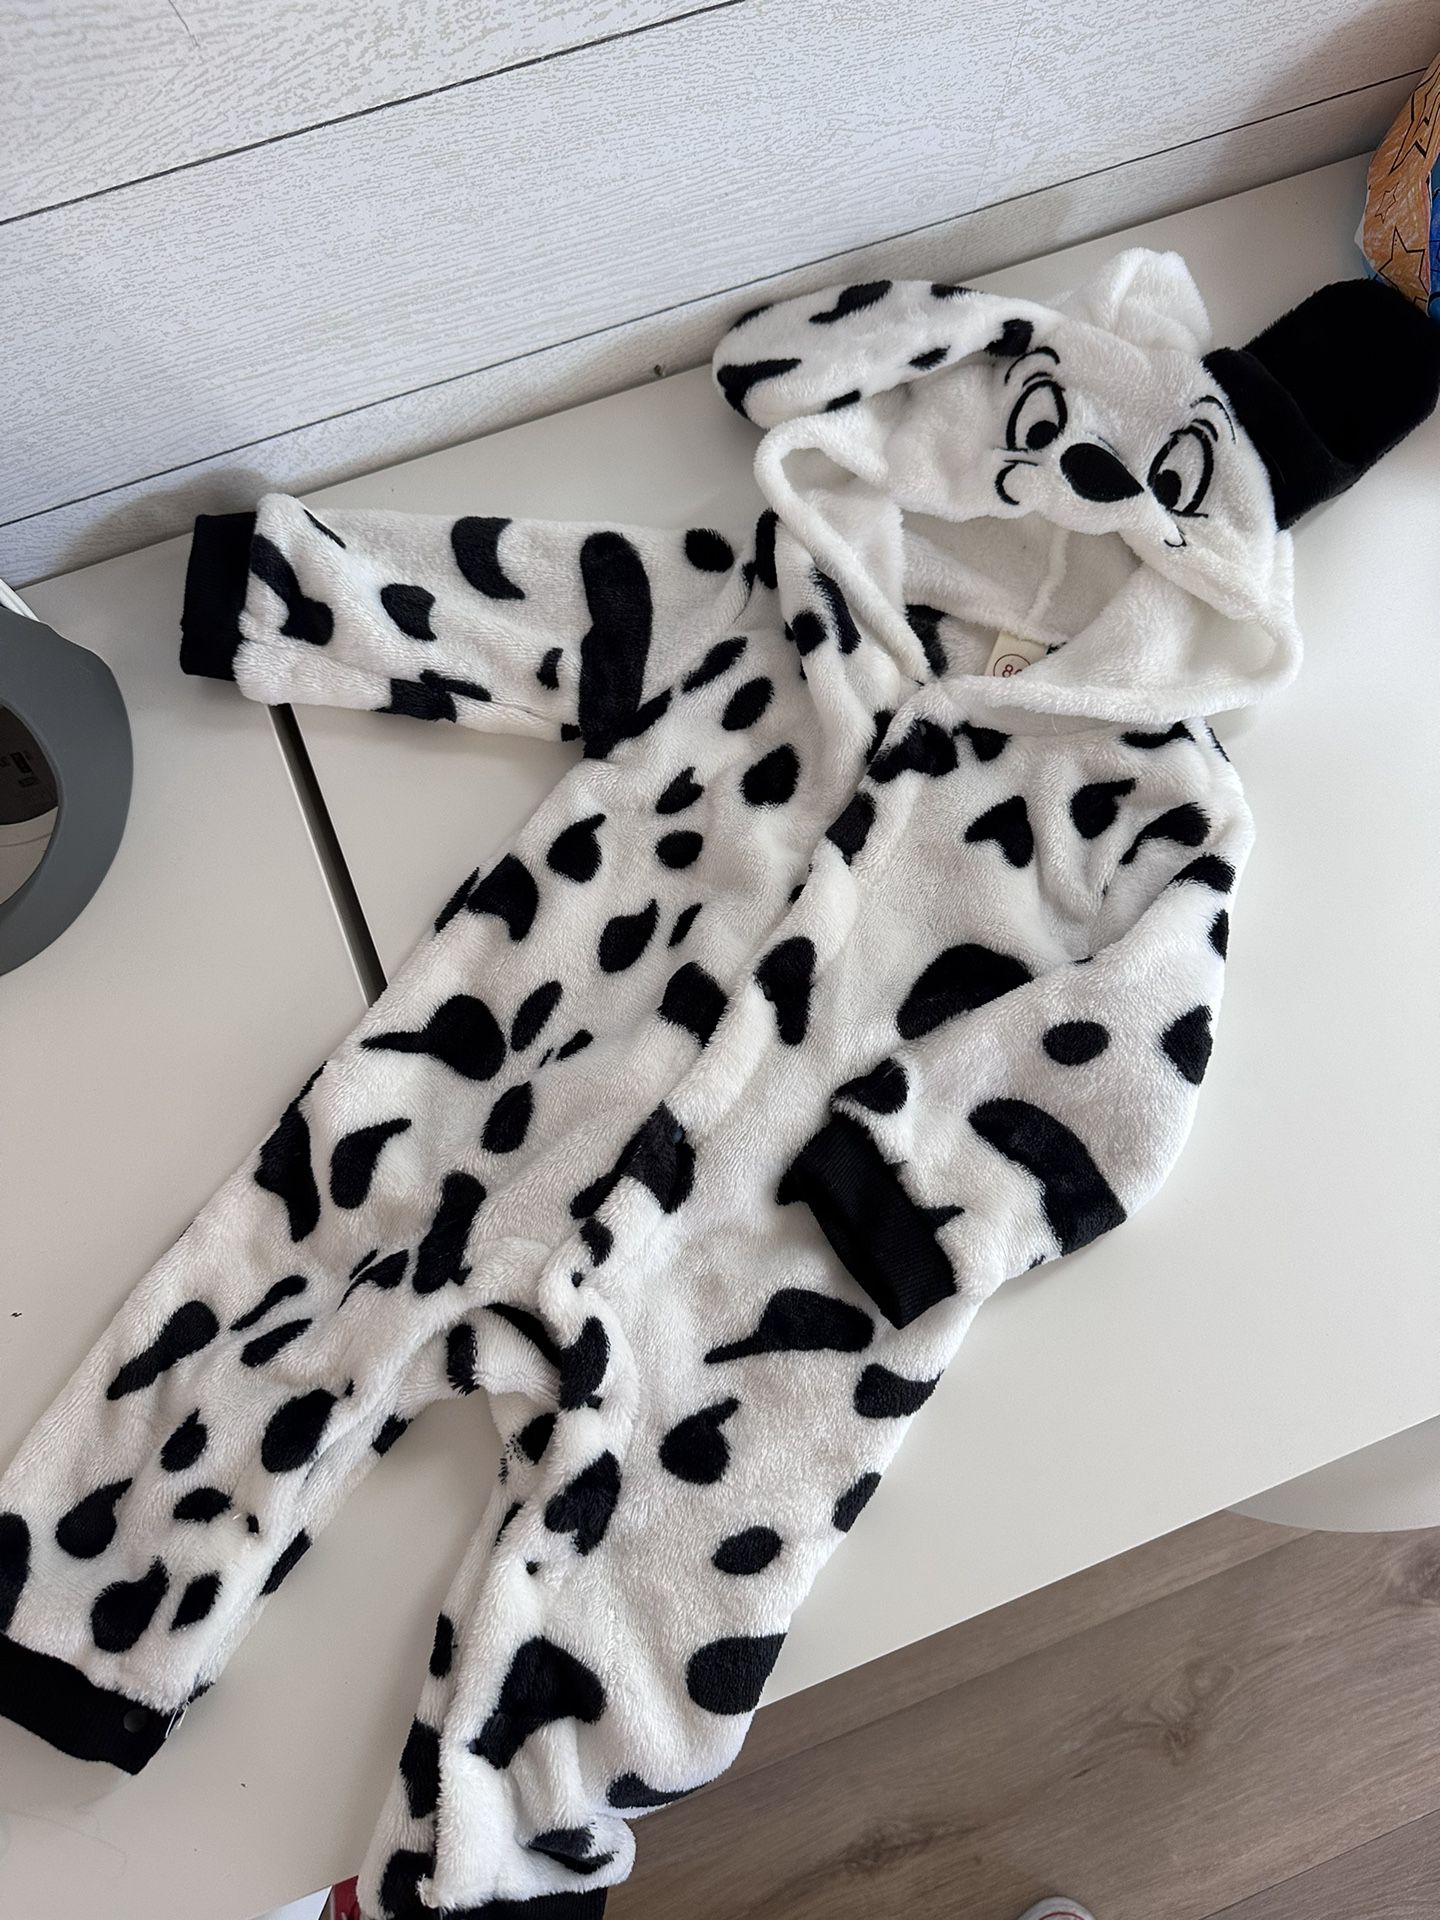 12m Dalmatian Costume